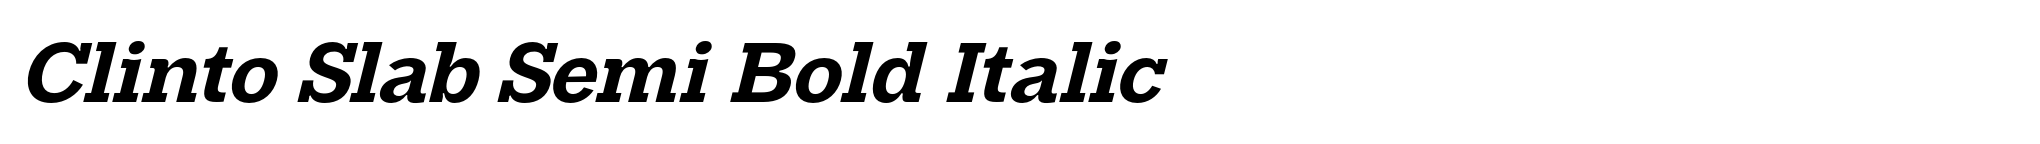 Clinto Slab Semi Bold Italic image